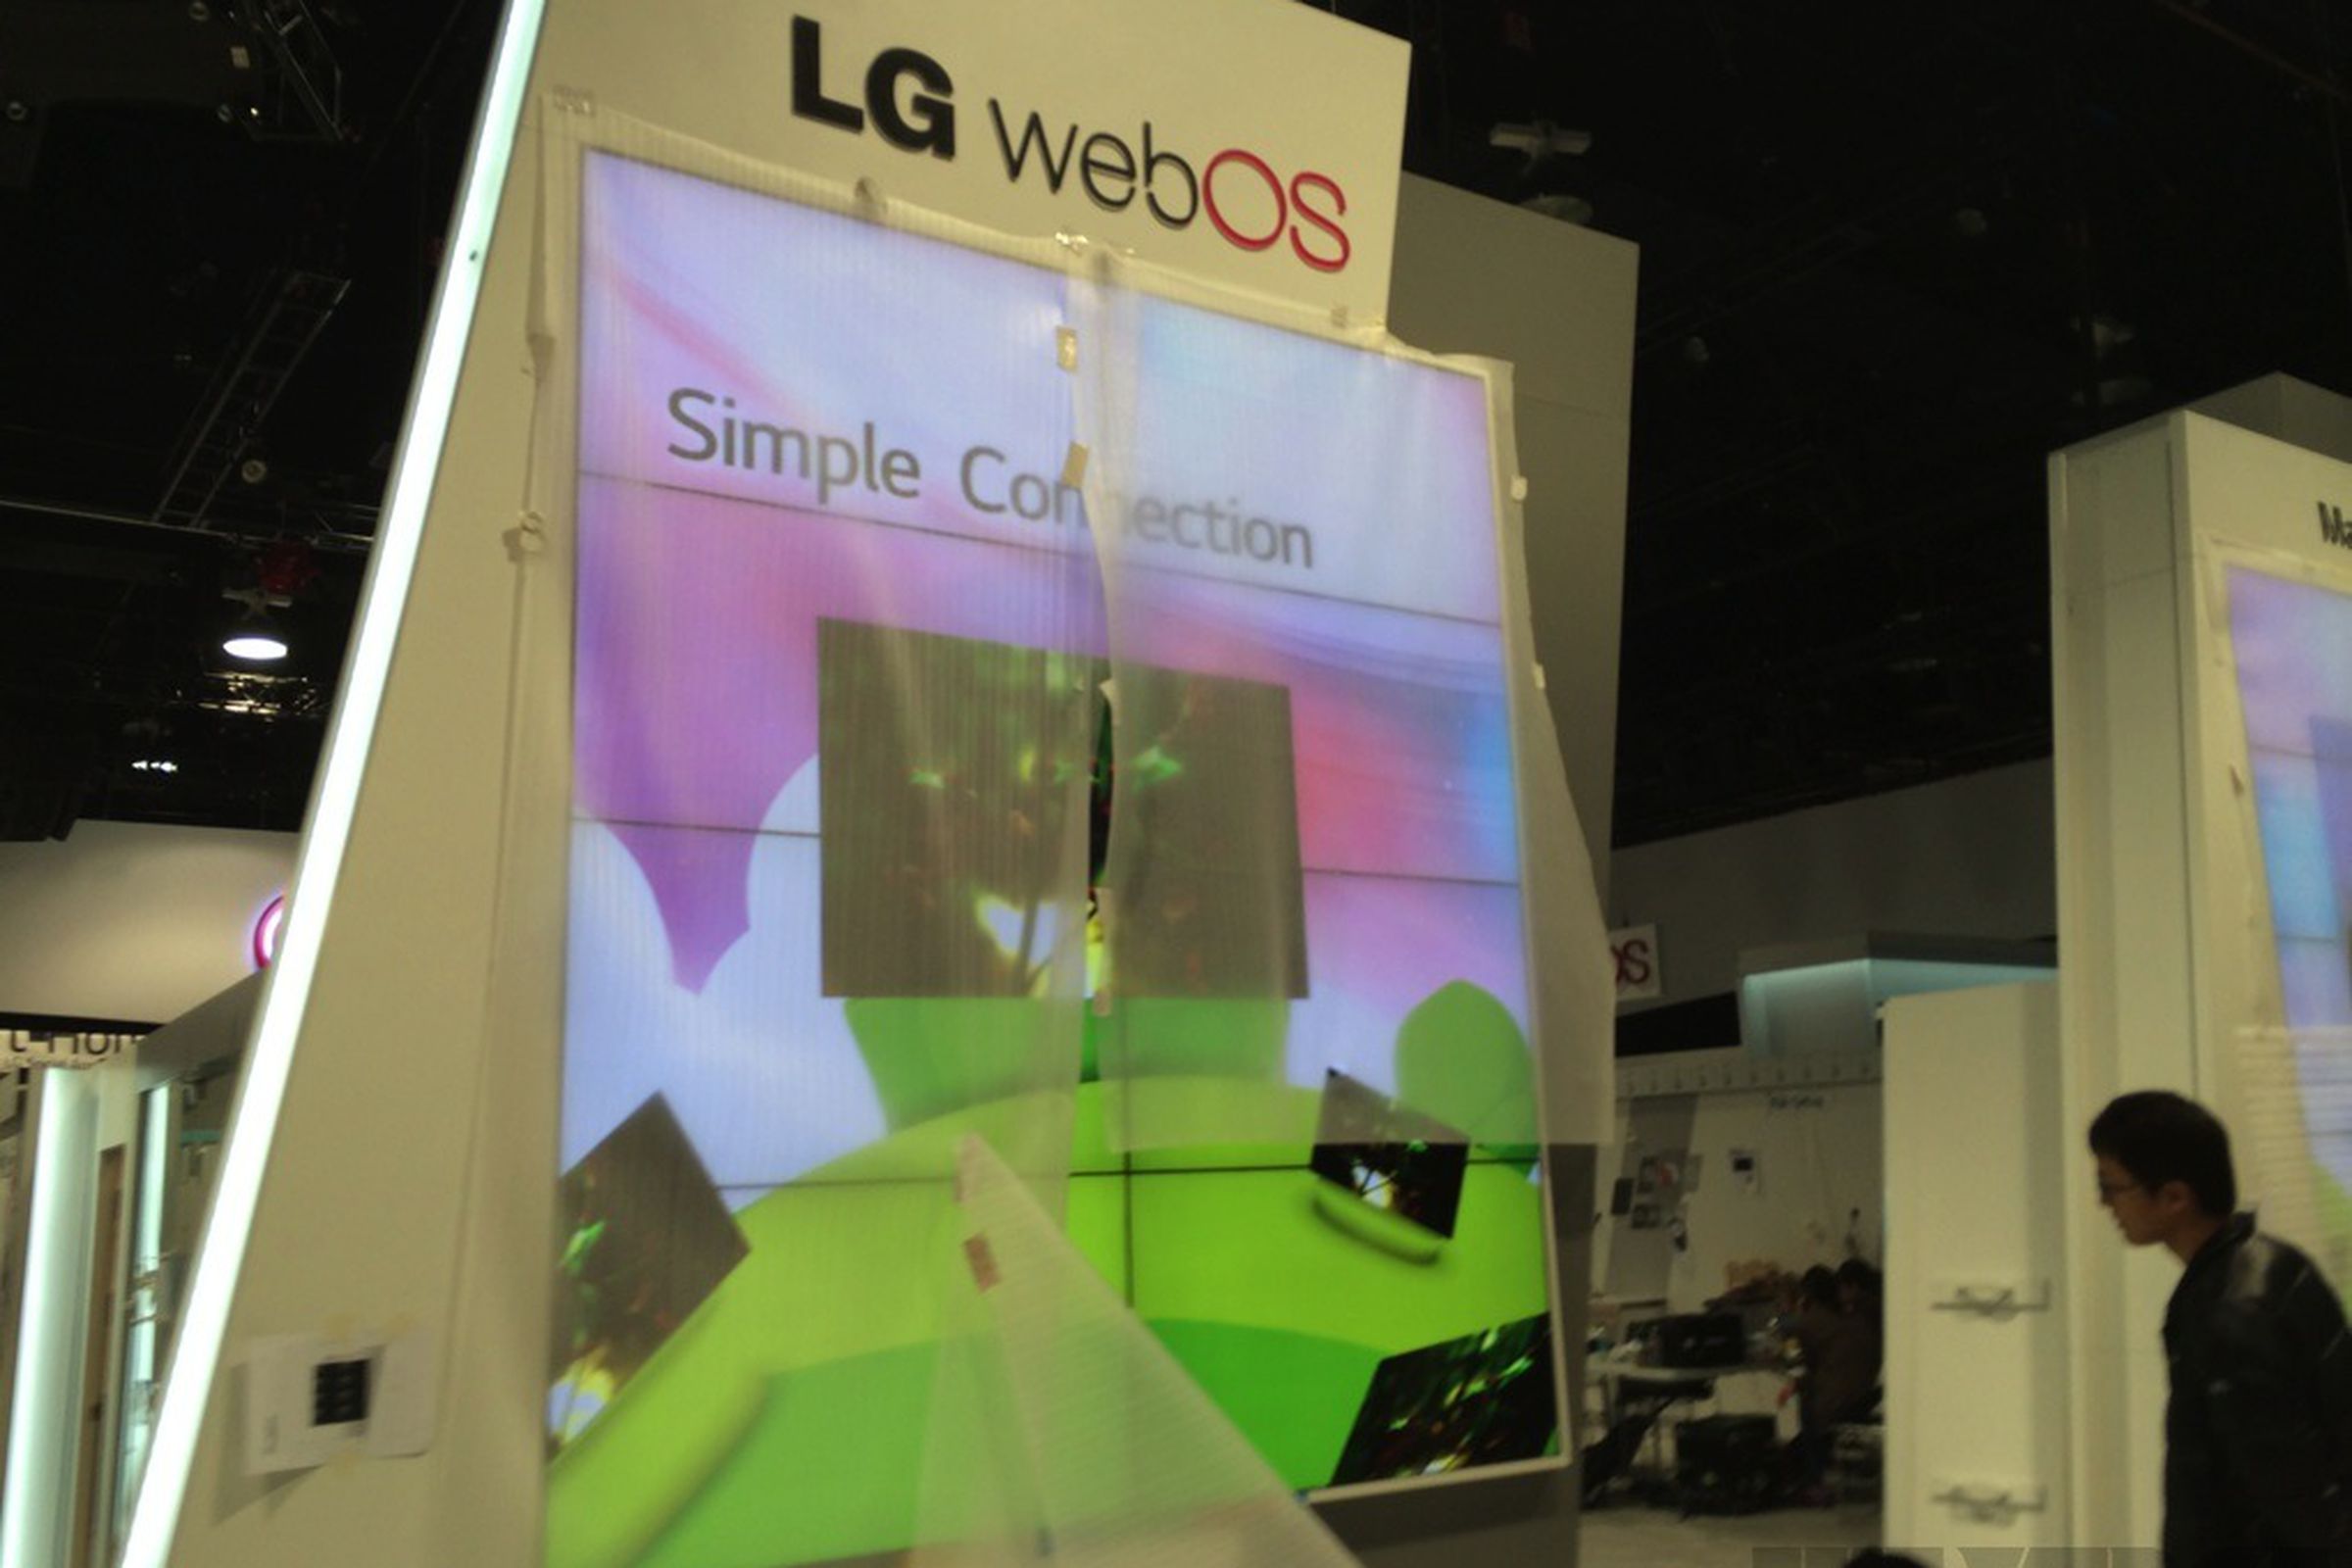 LG webOS TV CES show floor